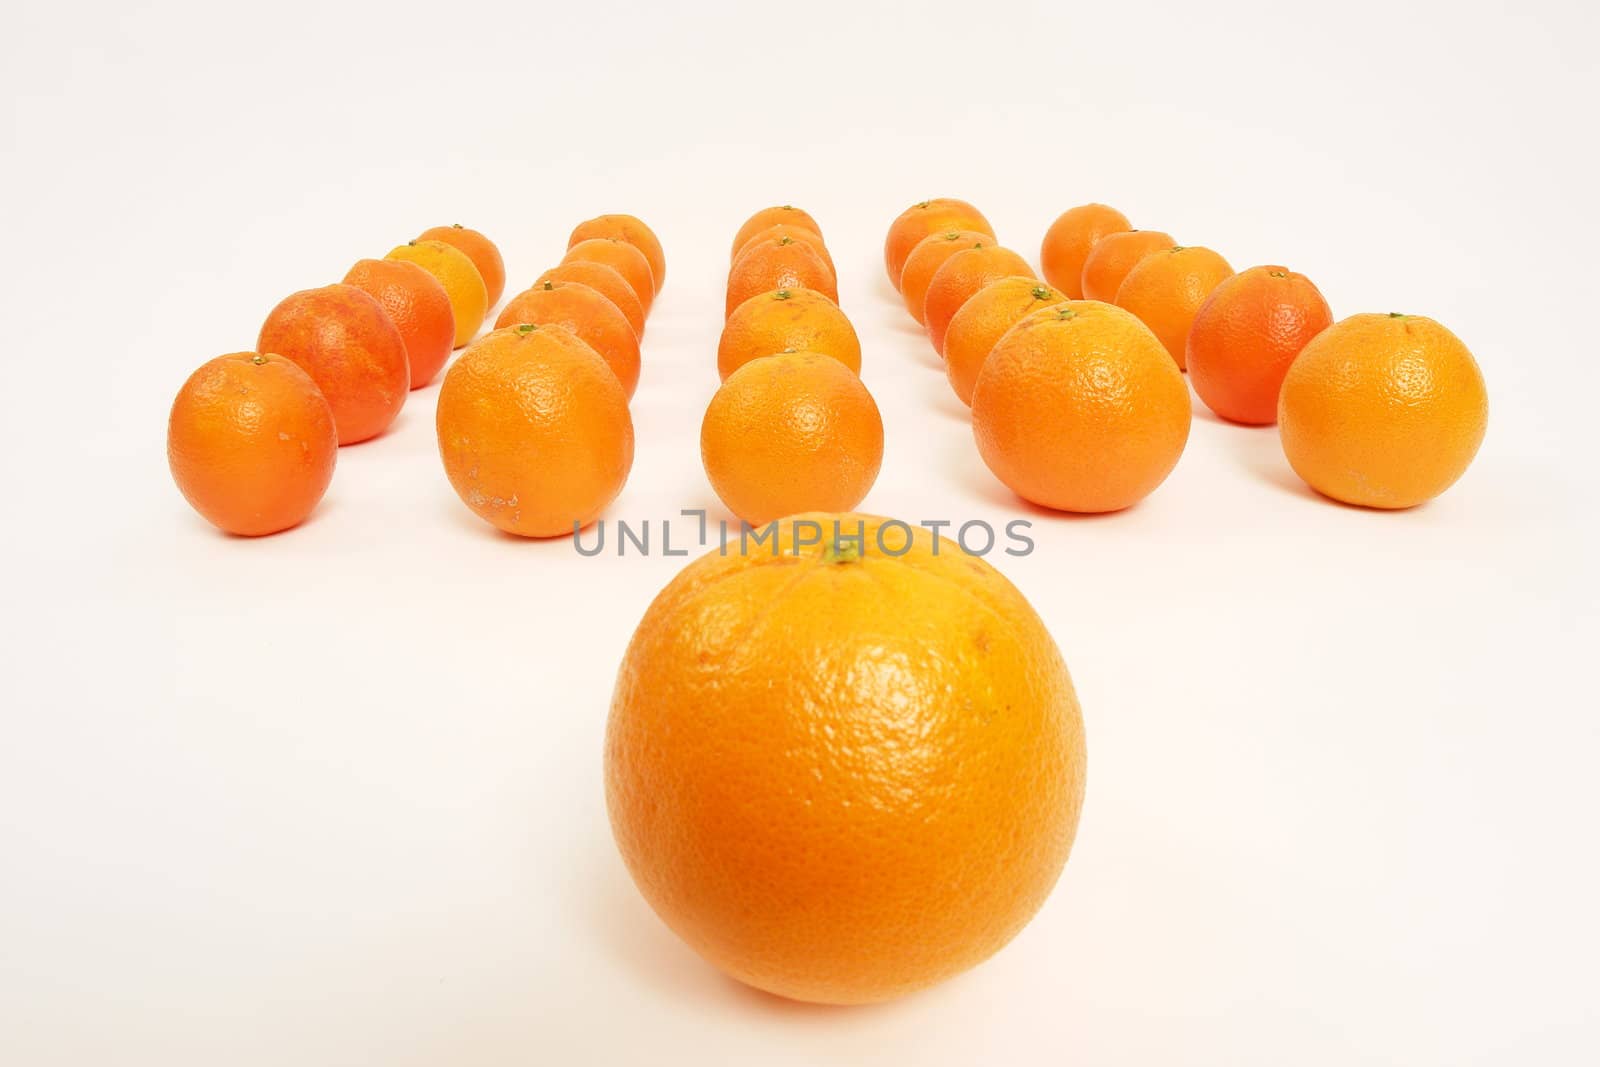 oranges arranged on a white background symbolizing teamwork, leadership............